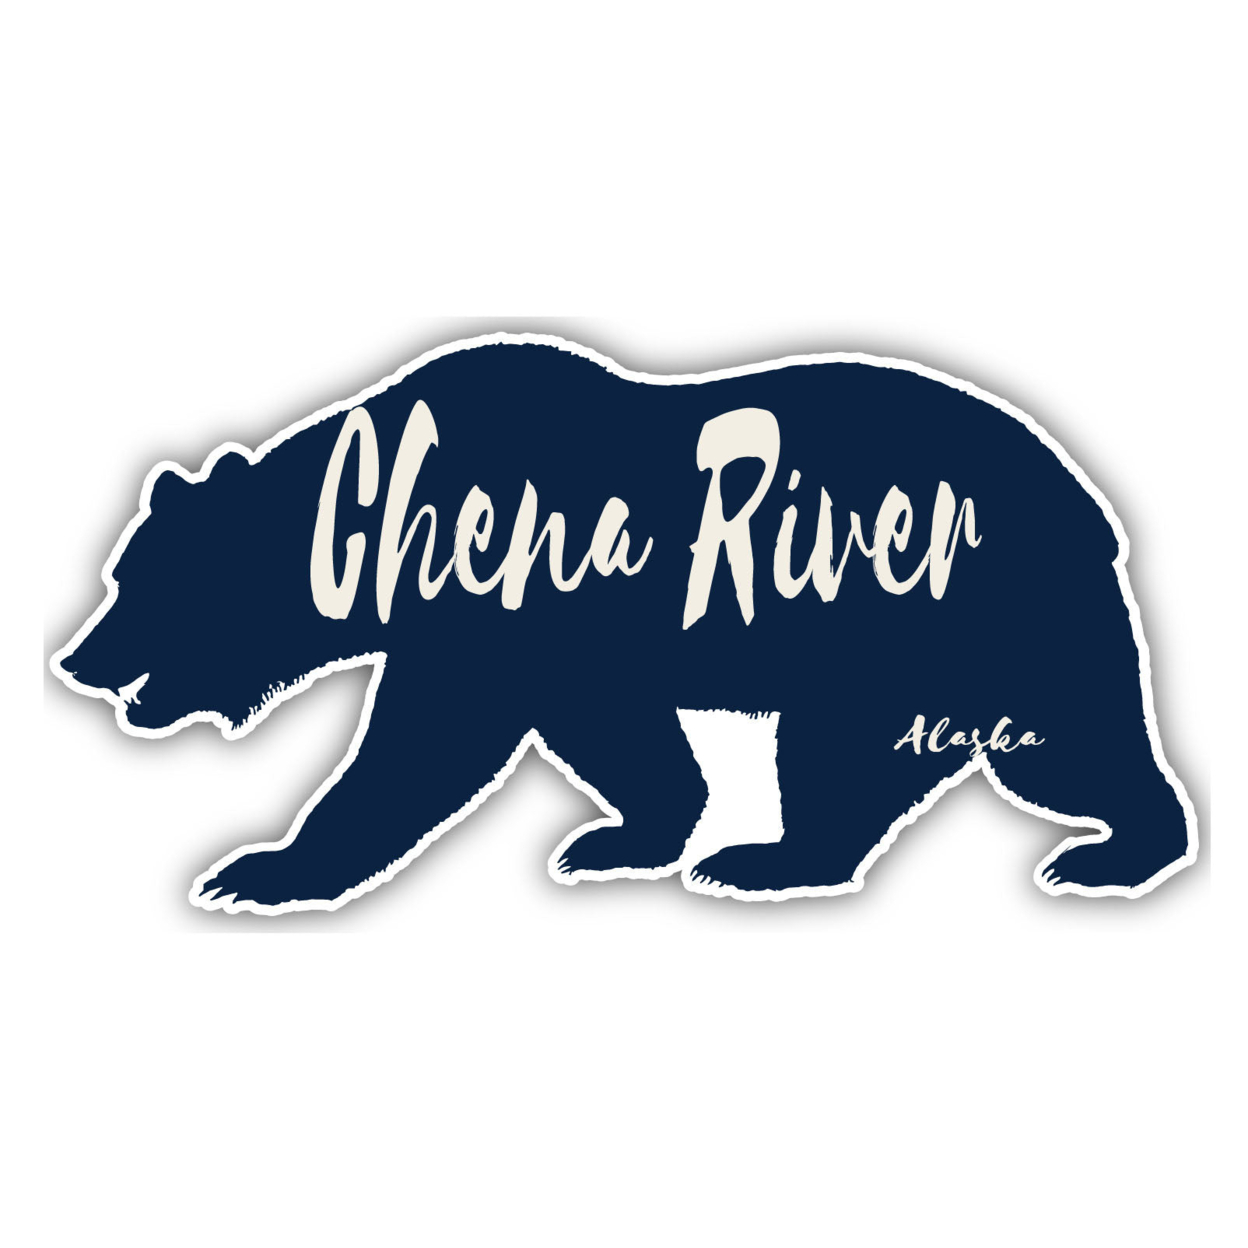 Chena River Alaska Souvenir Decorative Stickers (Choose Theme And Size) - 4-Pack, 6-Inch, Bear